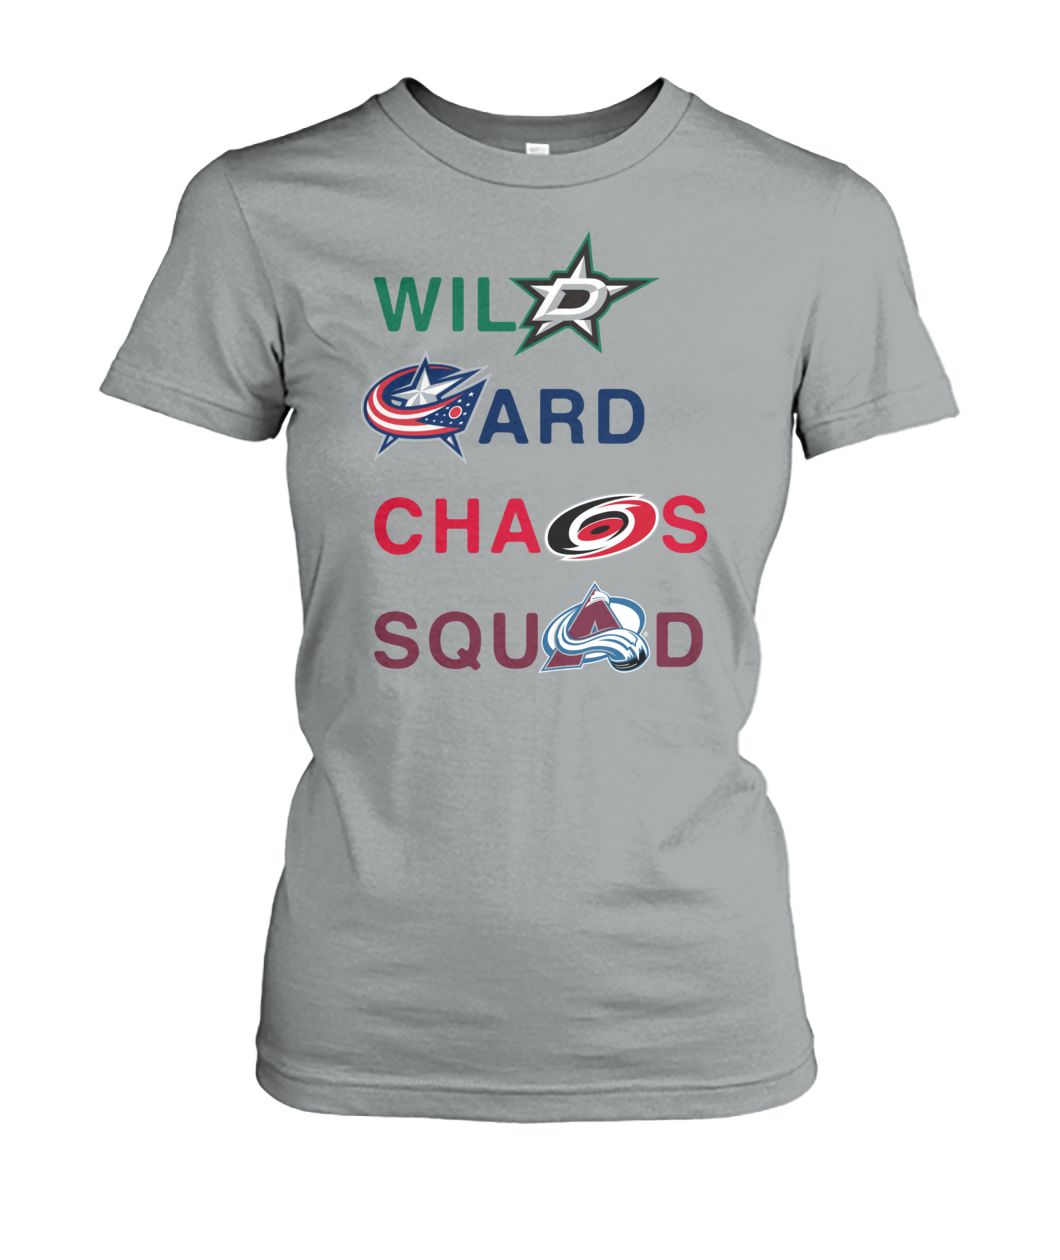 NHL wild card chaos squad women's crew tee